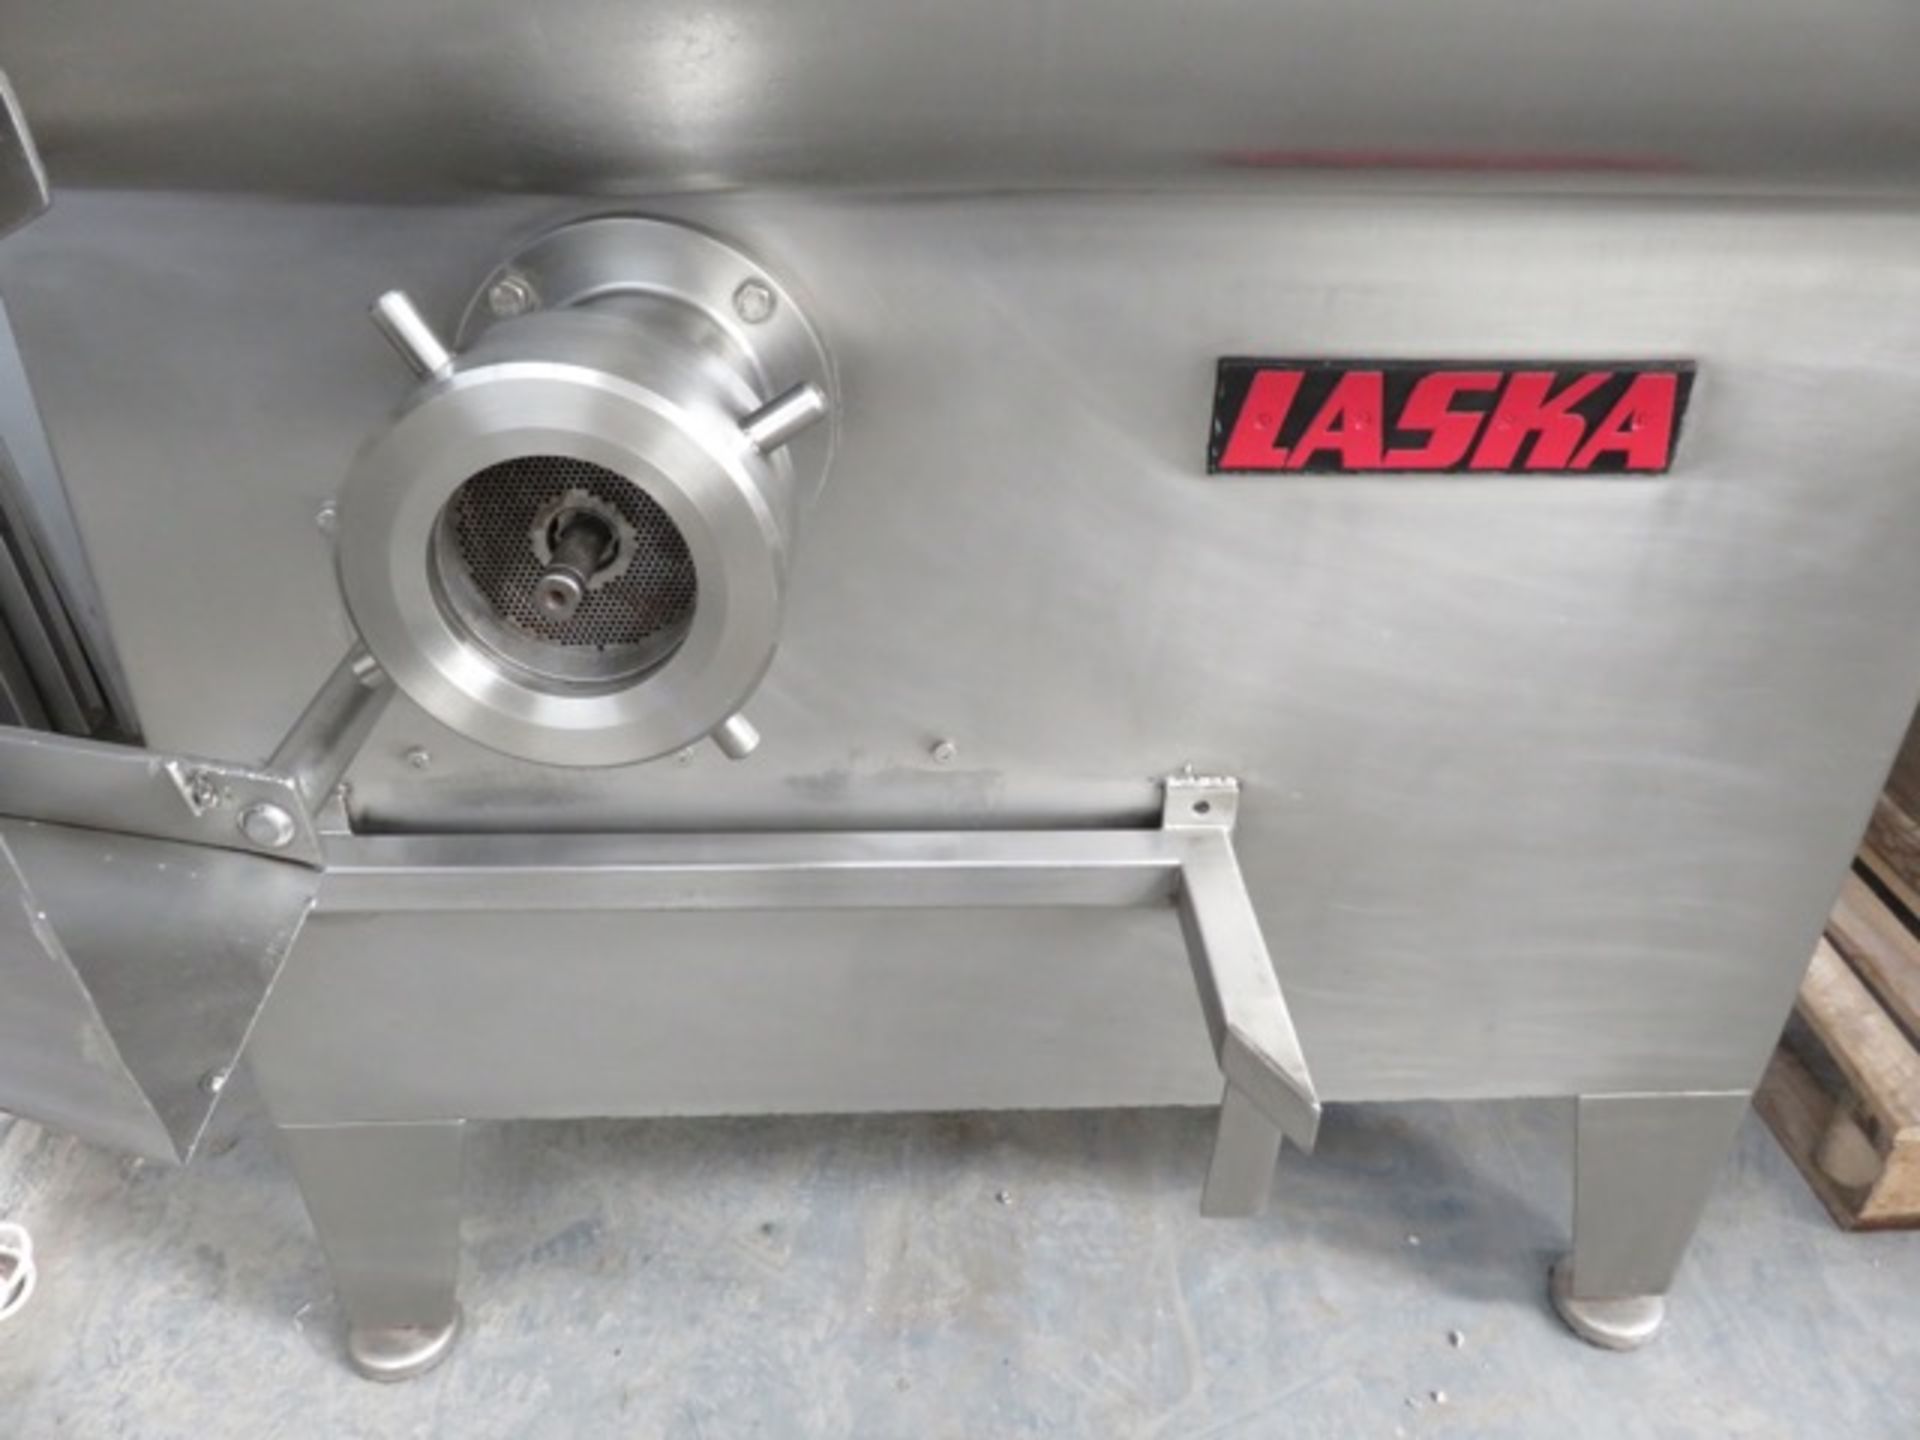 Laska cross feed Mixer Grinder. Model WMW133. Totally S/s 400litre mixer/grind. - Image 3 of 11